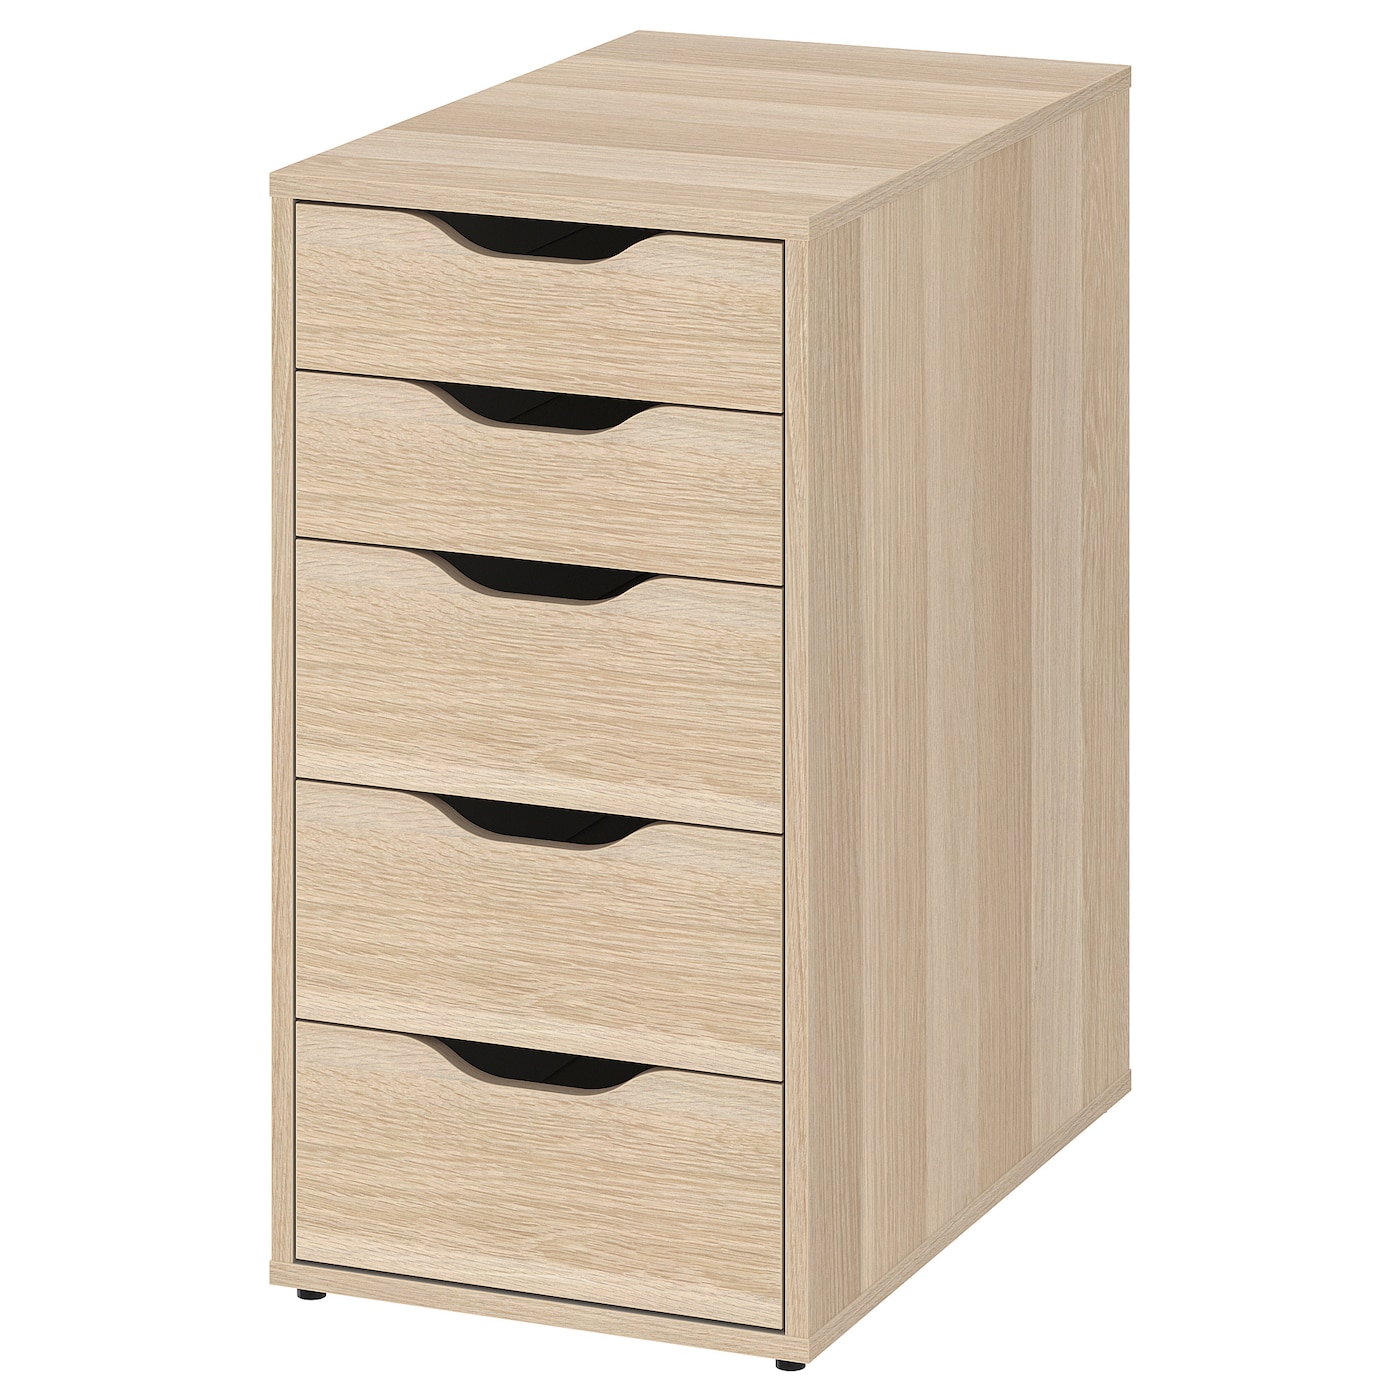 ALEX drawer unit white stained/oak effect - IKEA